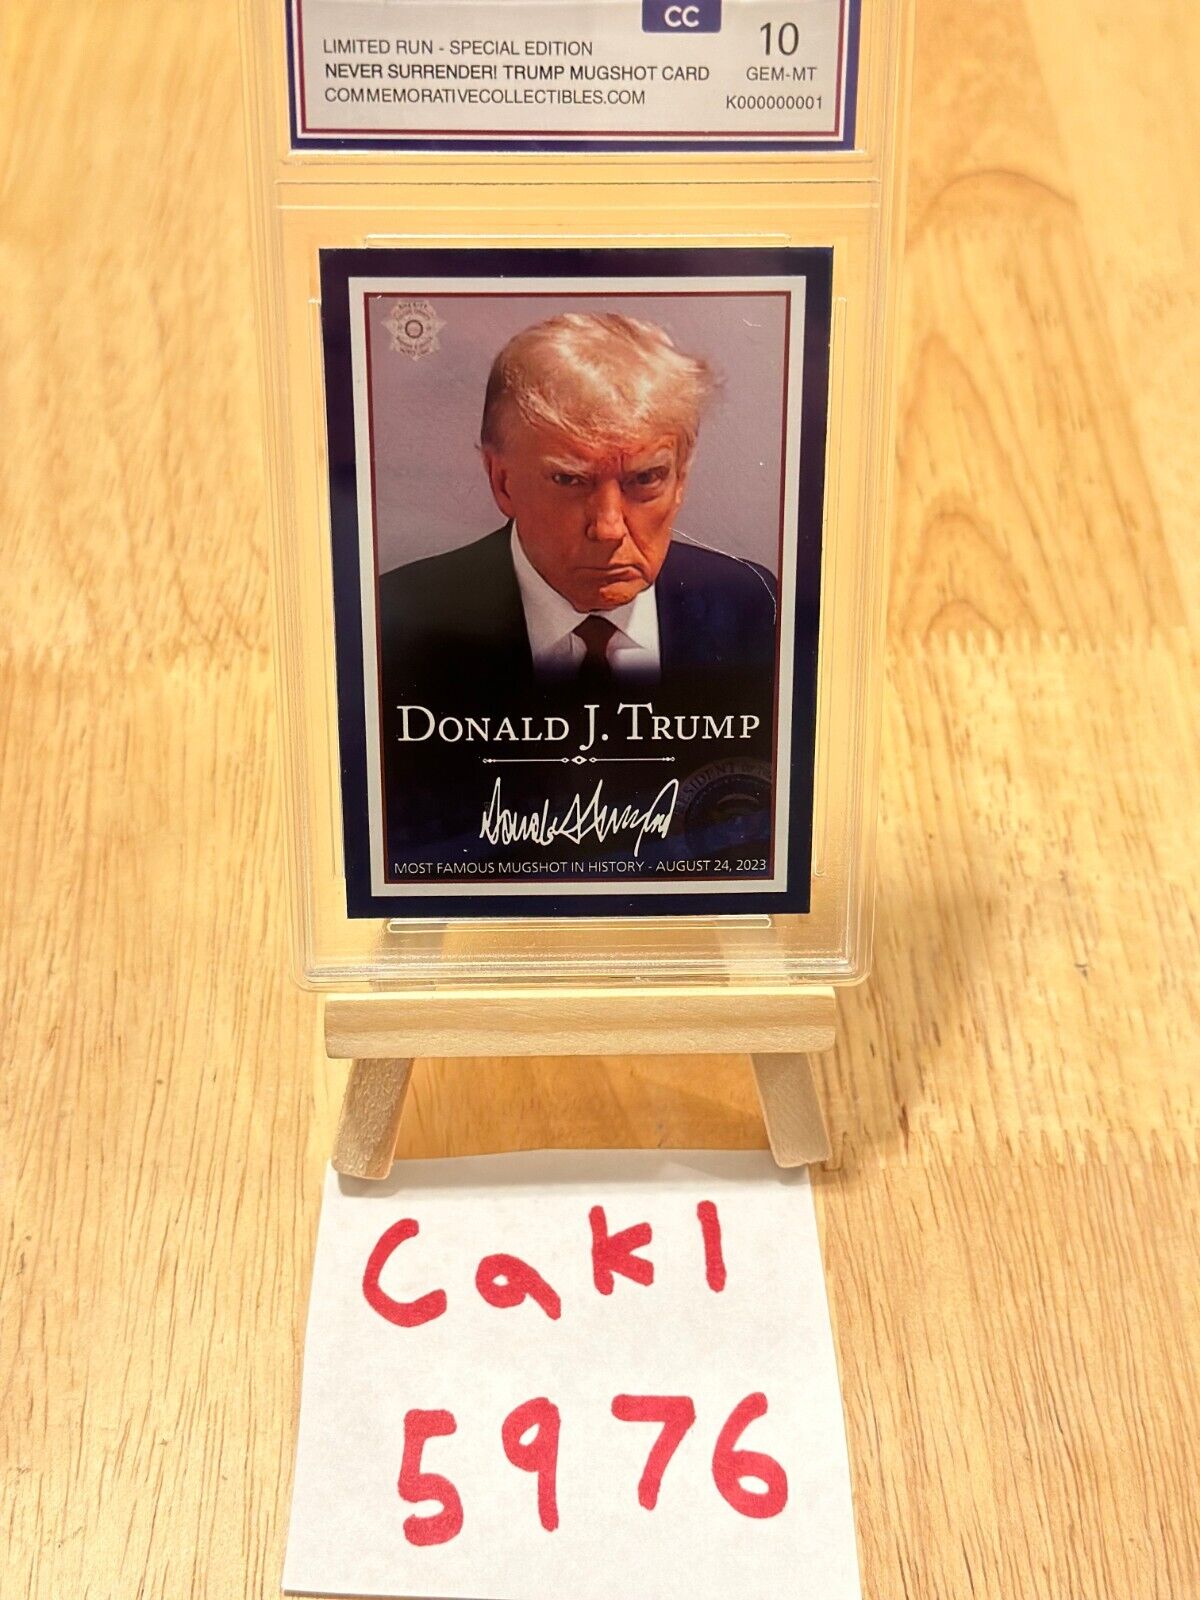 Holographic President Donald Trump Mugshot Mint Condition Trading Card MAGA